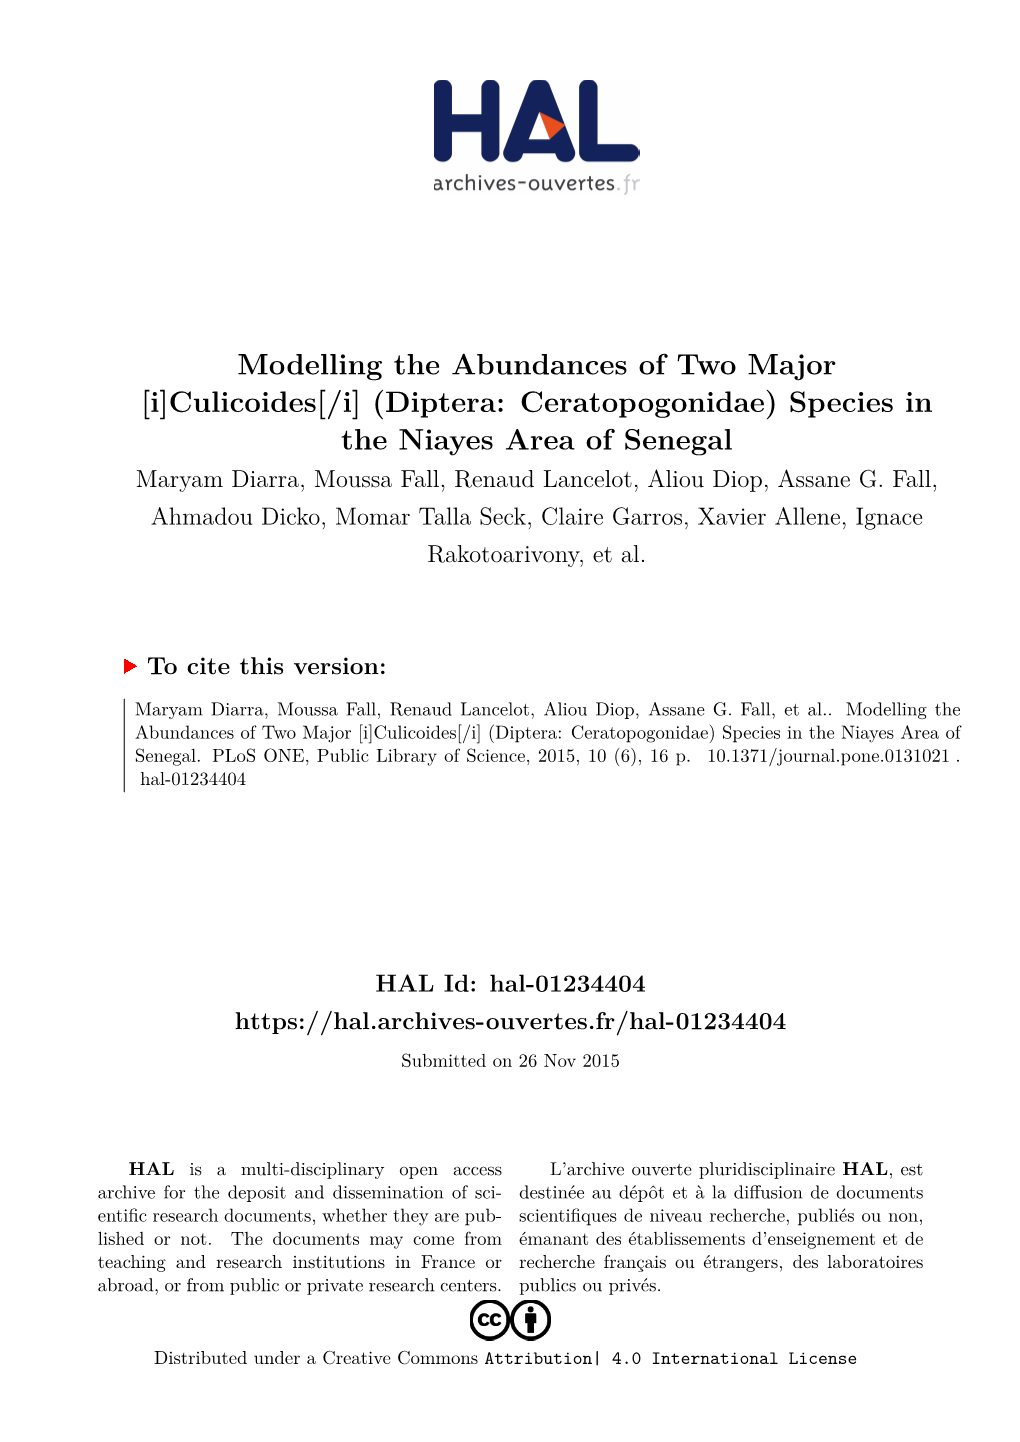 Diptera: Ceratopogonidae) Species in the Niayes Area of Senegal Maryam Diarra, Moussa Fall, Renaud Lancelot, Aliou Diop, Assane G